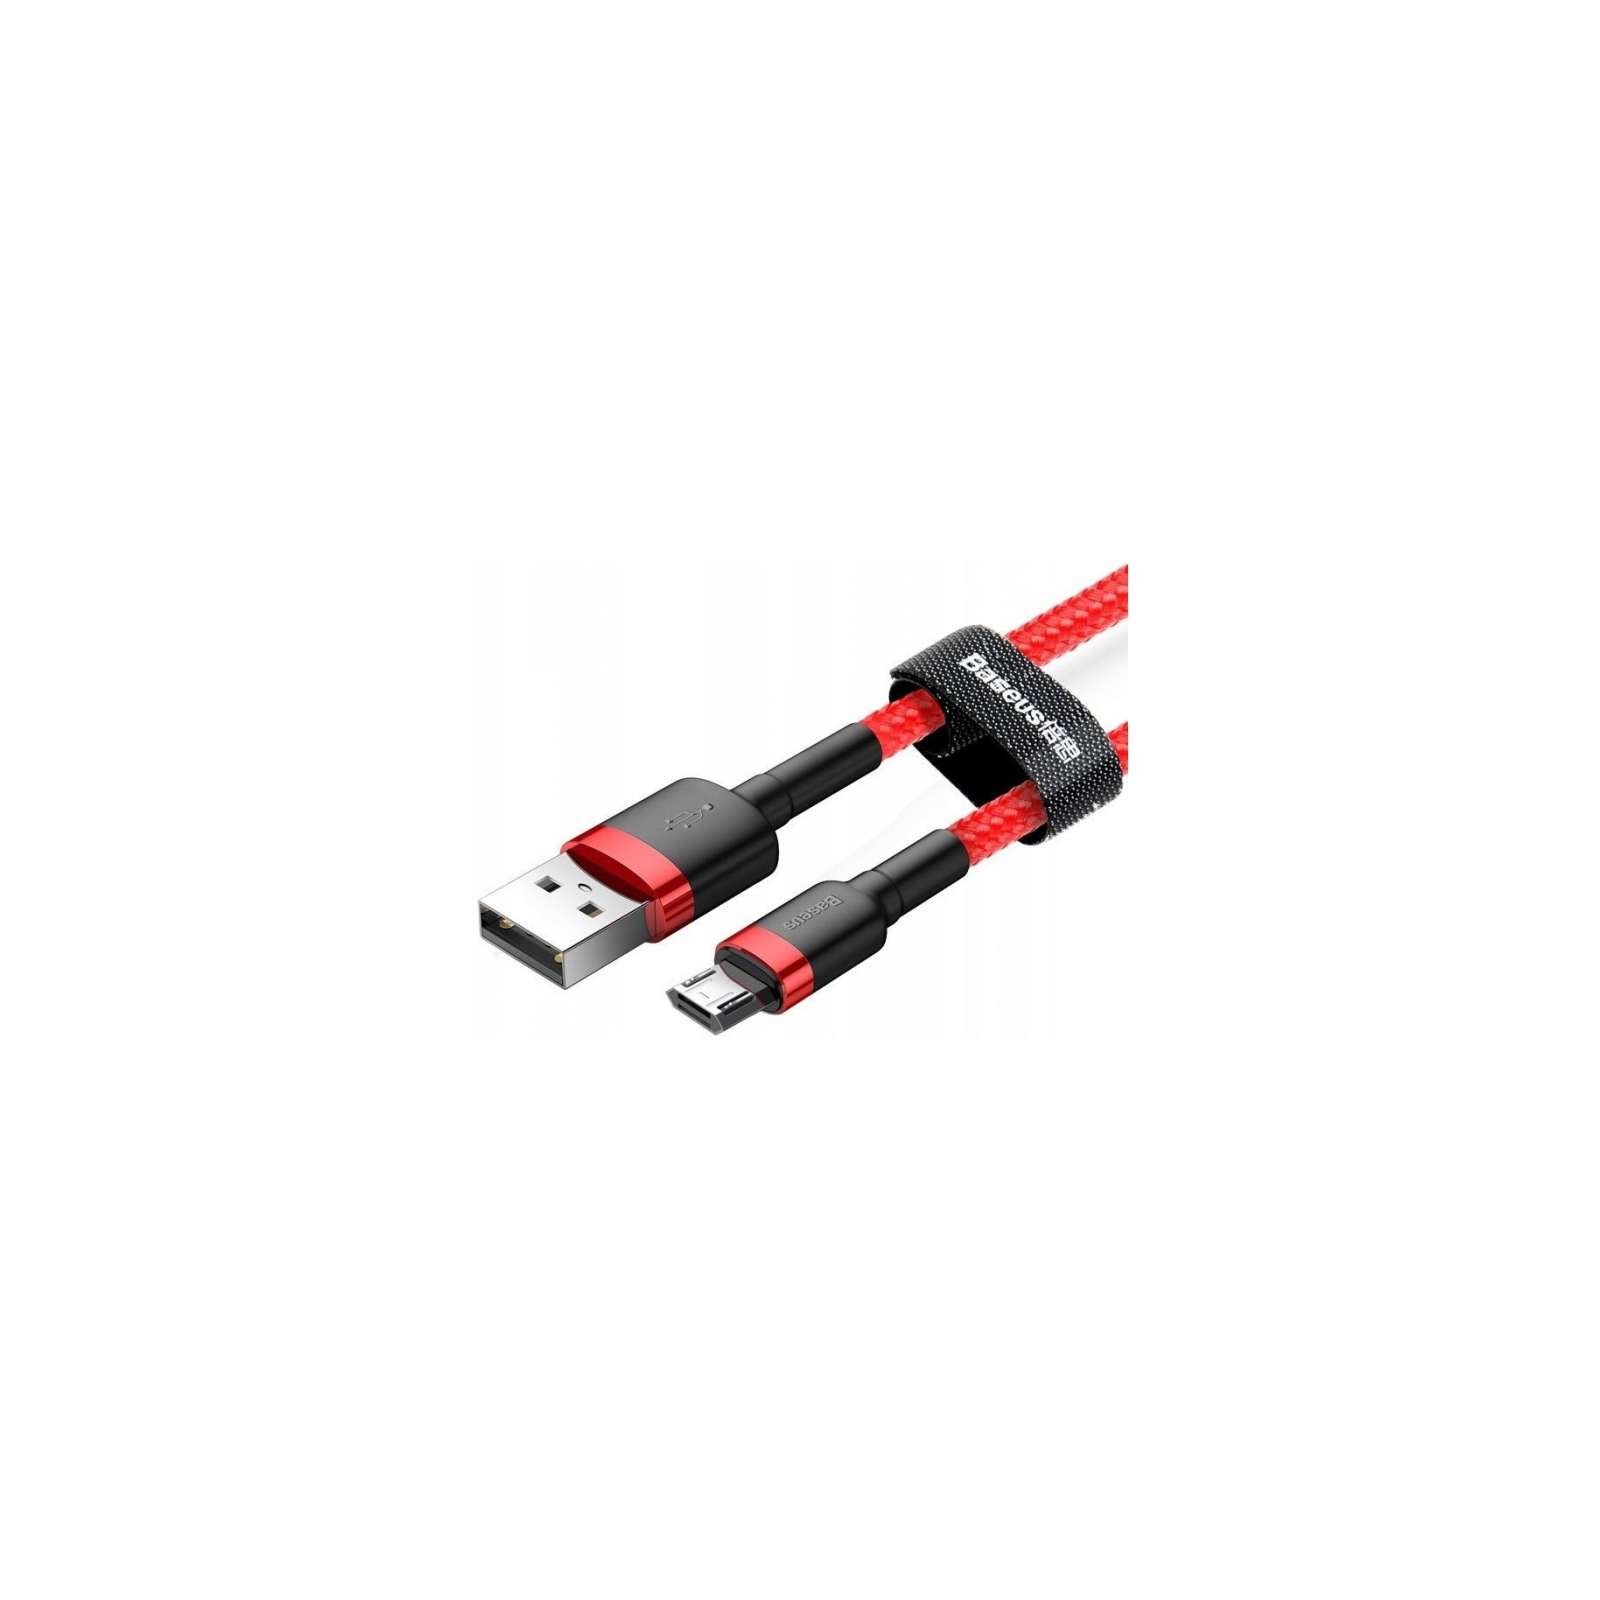 Дата кабель USB 2.0 AM to Micro 5P 1.0m Cafule 2.4A red+black Baseus (CAMKLF-B91)